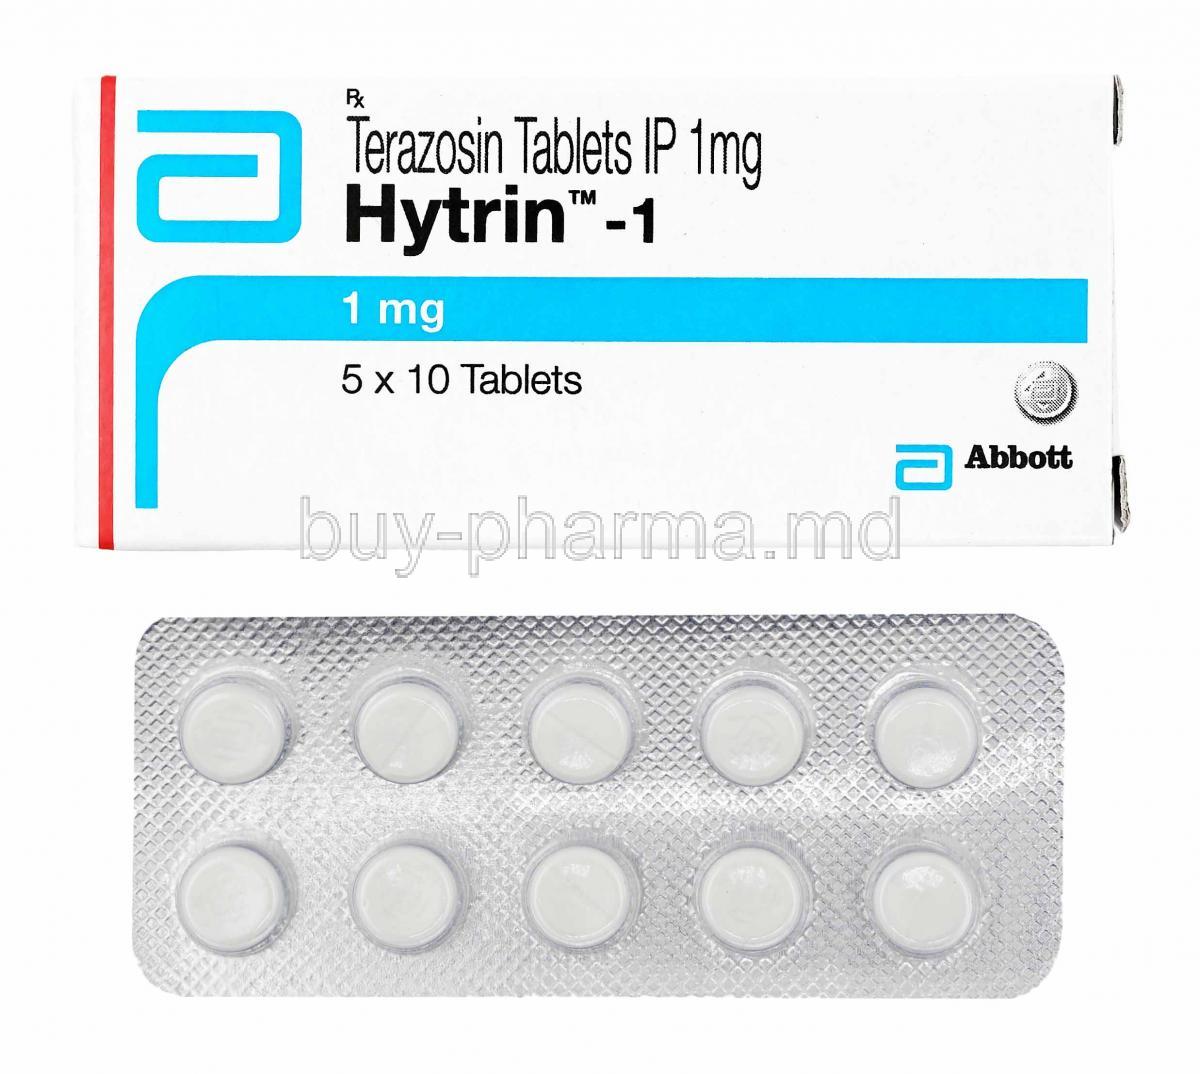 Hytrin, Terazosin 1mg box and tablets